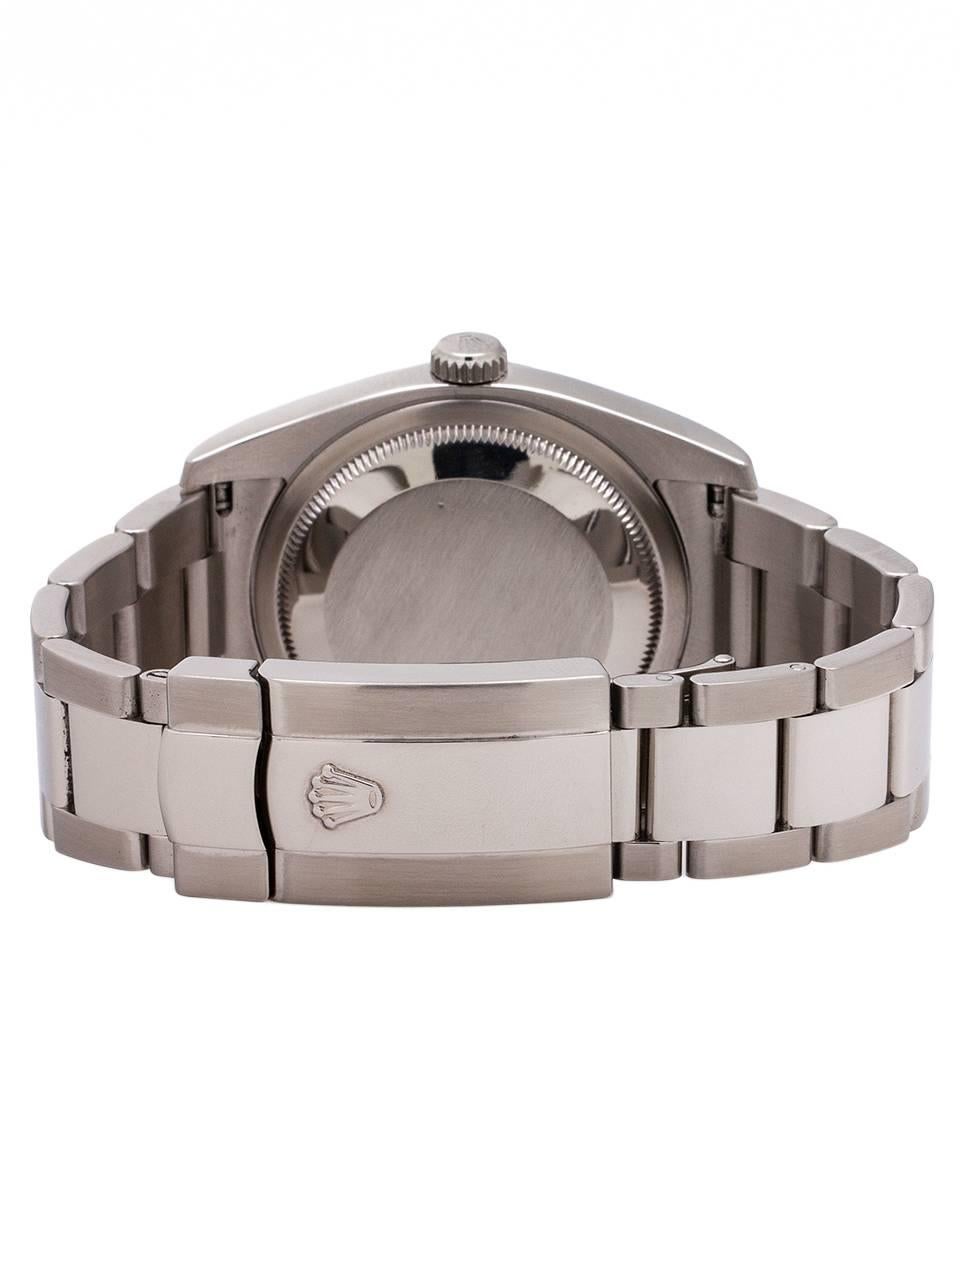 Men's Rolex Stainless Steel Datejust Self Winding Wristwatch Ref 116200, circa 2007